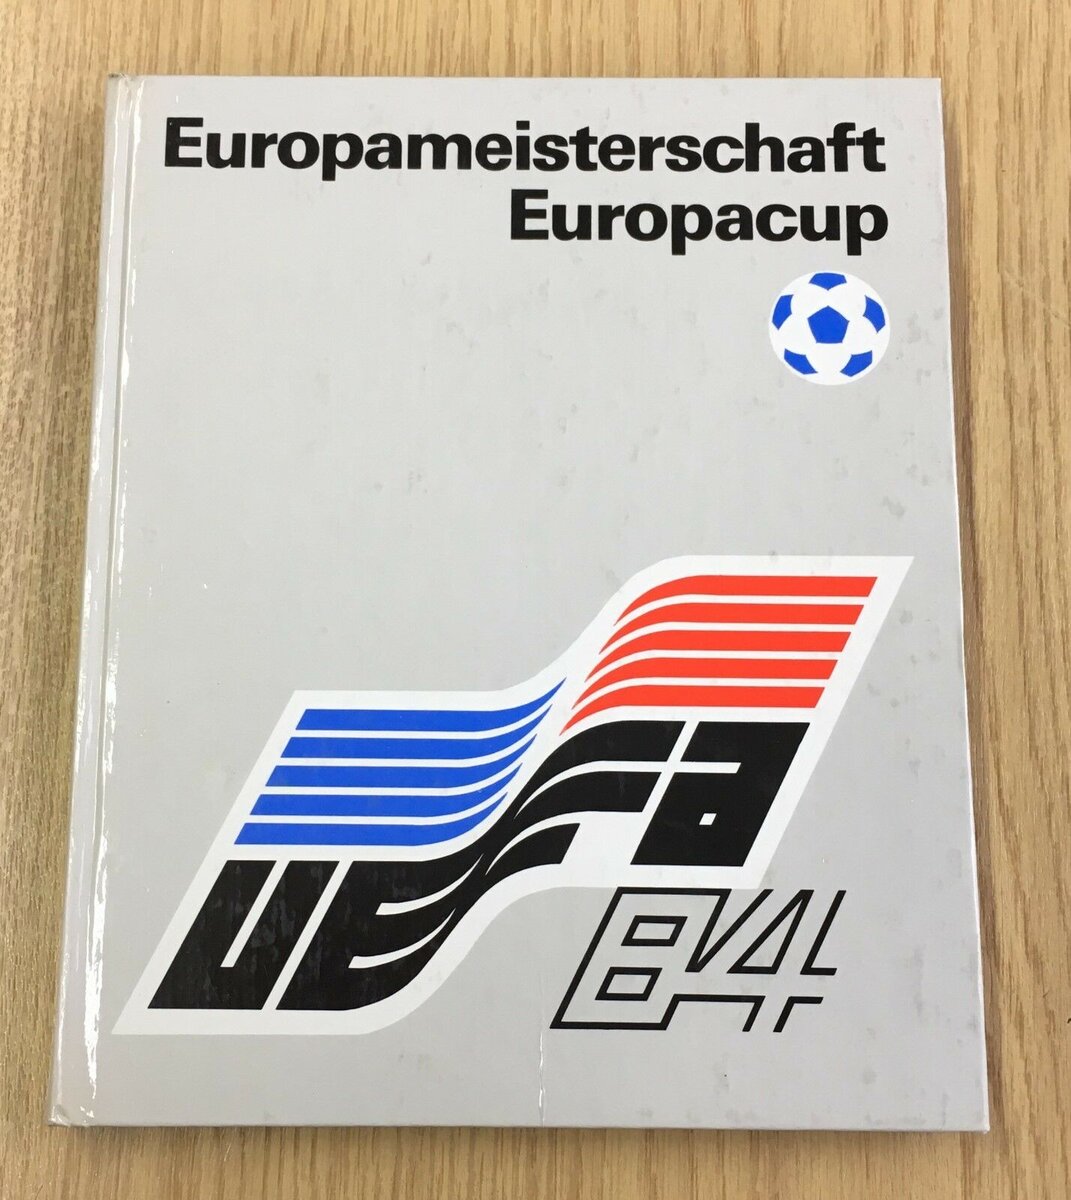 rsz_uefa-euro84-yearbook-ebaygermany-march2021.jpg